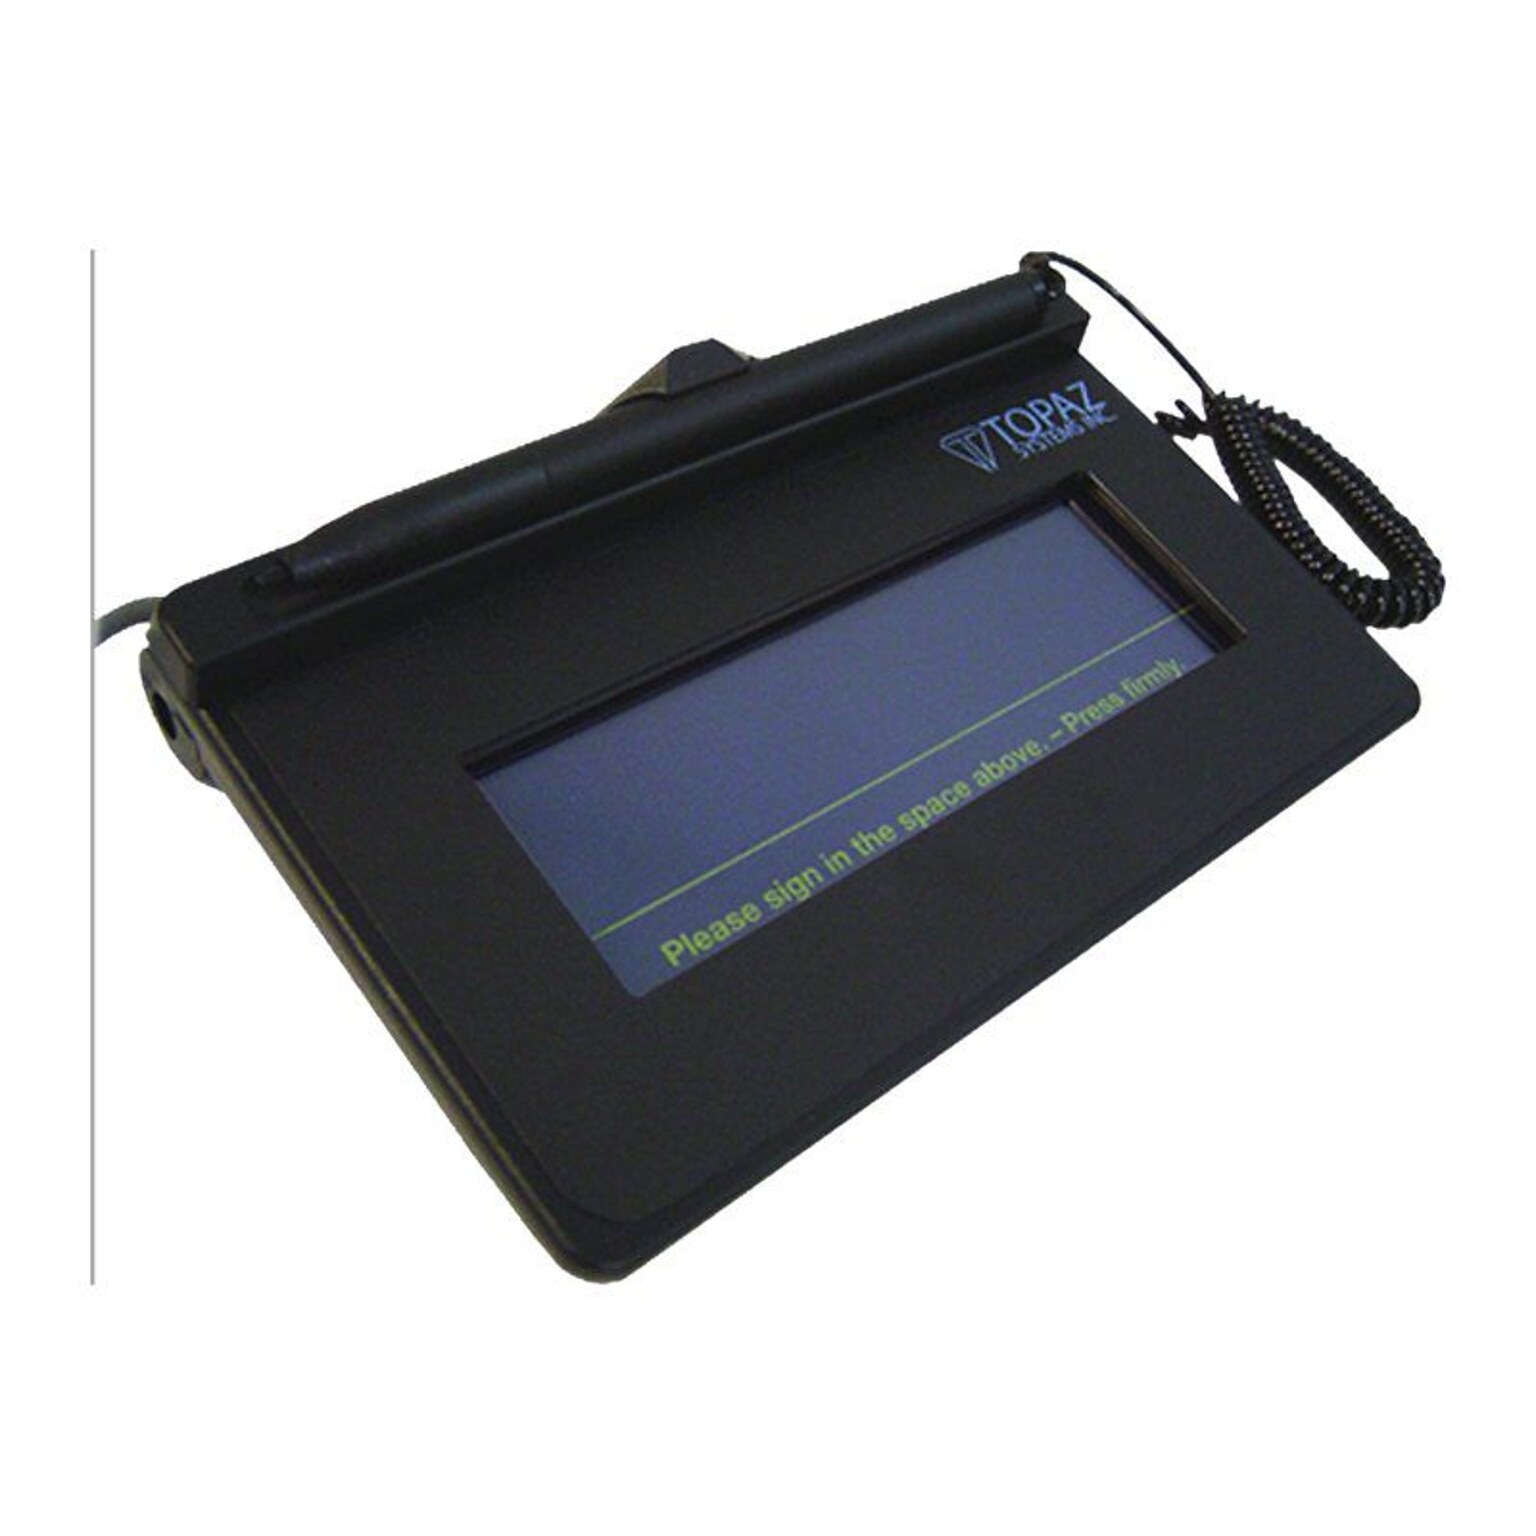 Topaz® SigLite® 1X5 Virtual Serial via USB Signature Pad With Stylus; Black, 4.3 x 1.4